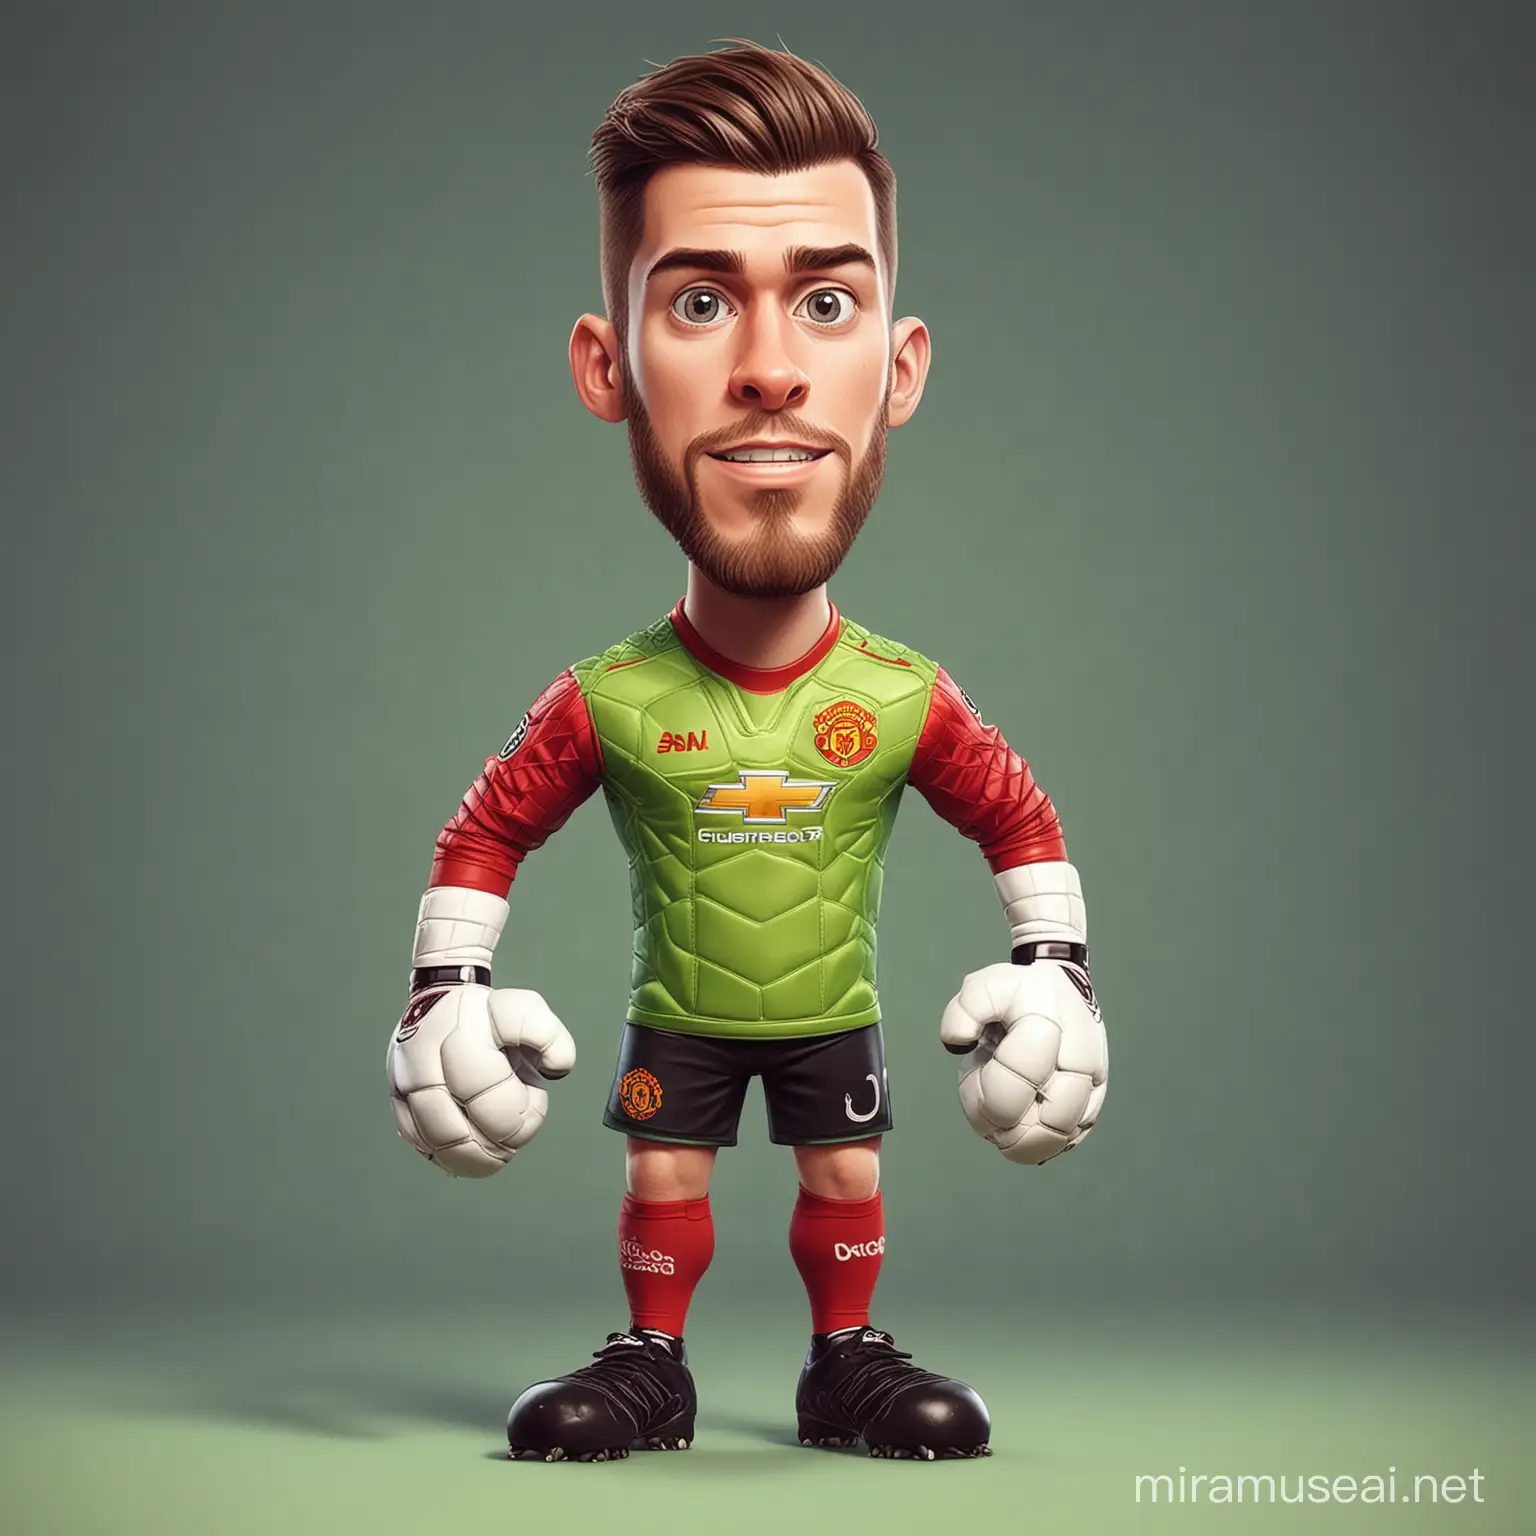 David de Gea cartoon goalkeeper style